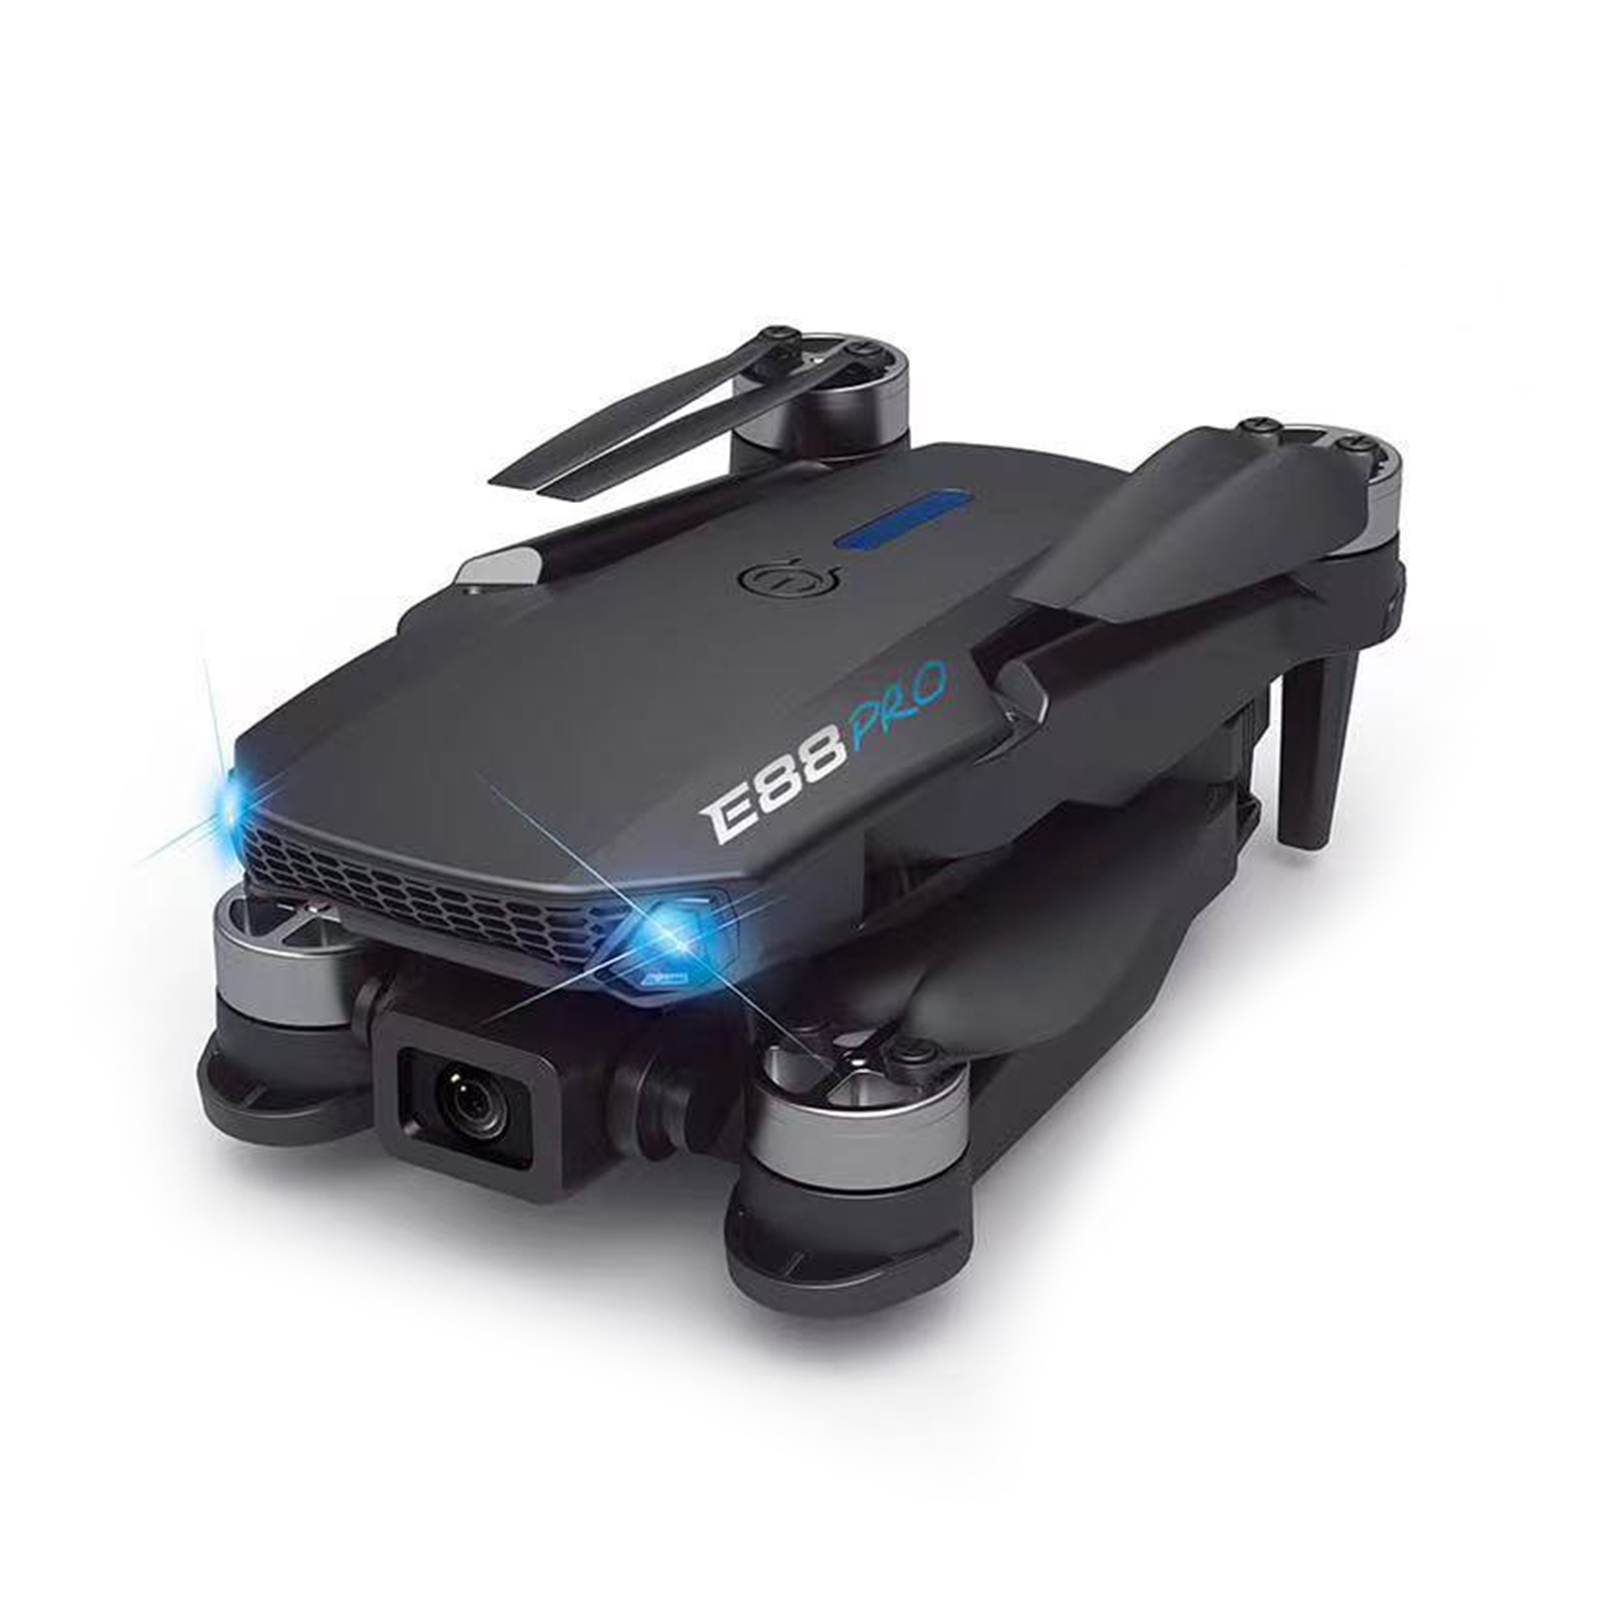 E58E88 998MAX RC Drone with 4k Camera Aerial Photography Foldable Remote Control Quadcopter